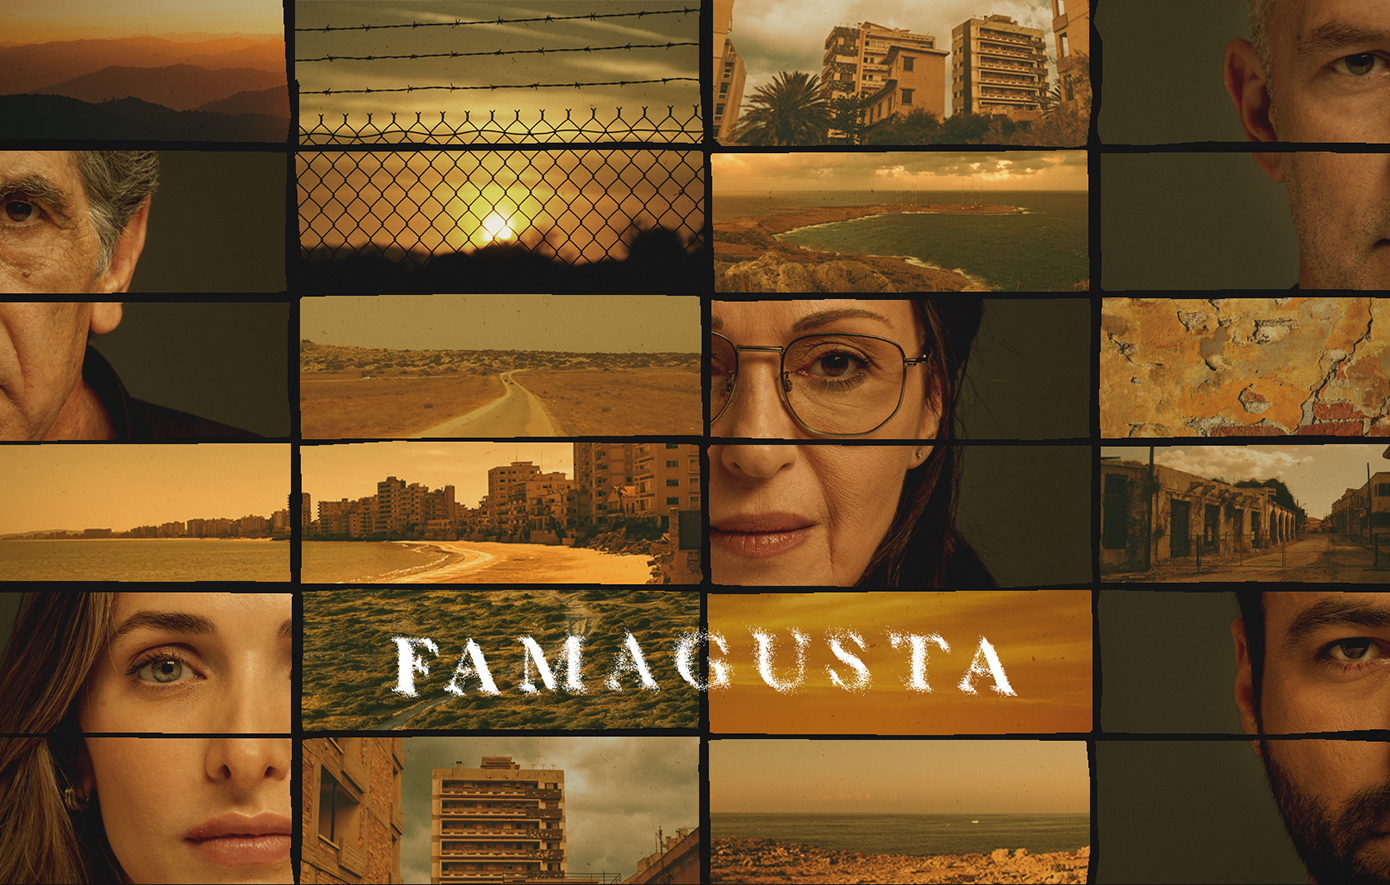 Famagusta: Νέο τραγούδι ανοίγει την αυλαία του β’ κύκλου, με την υπέροχη φωνή της Γιώτας Νέγκα